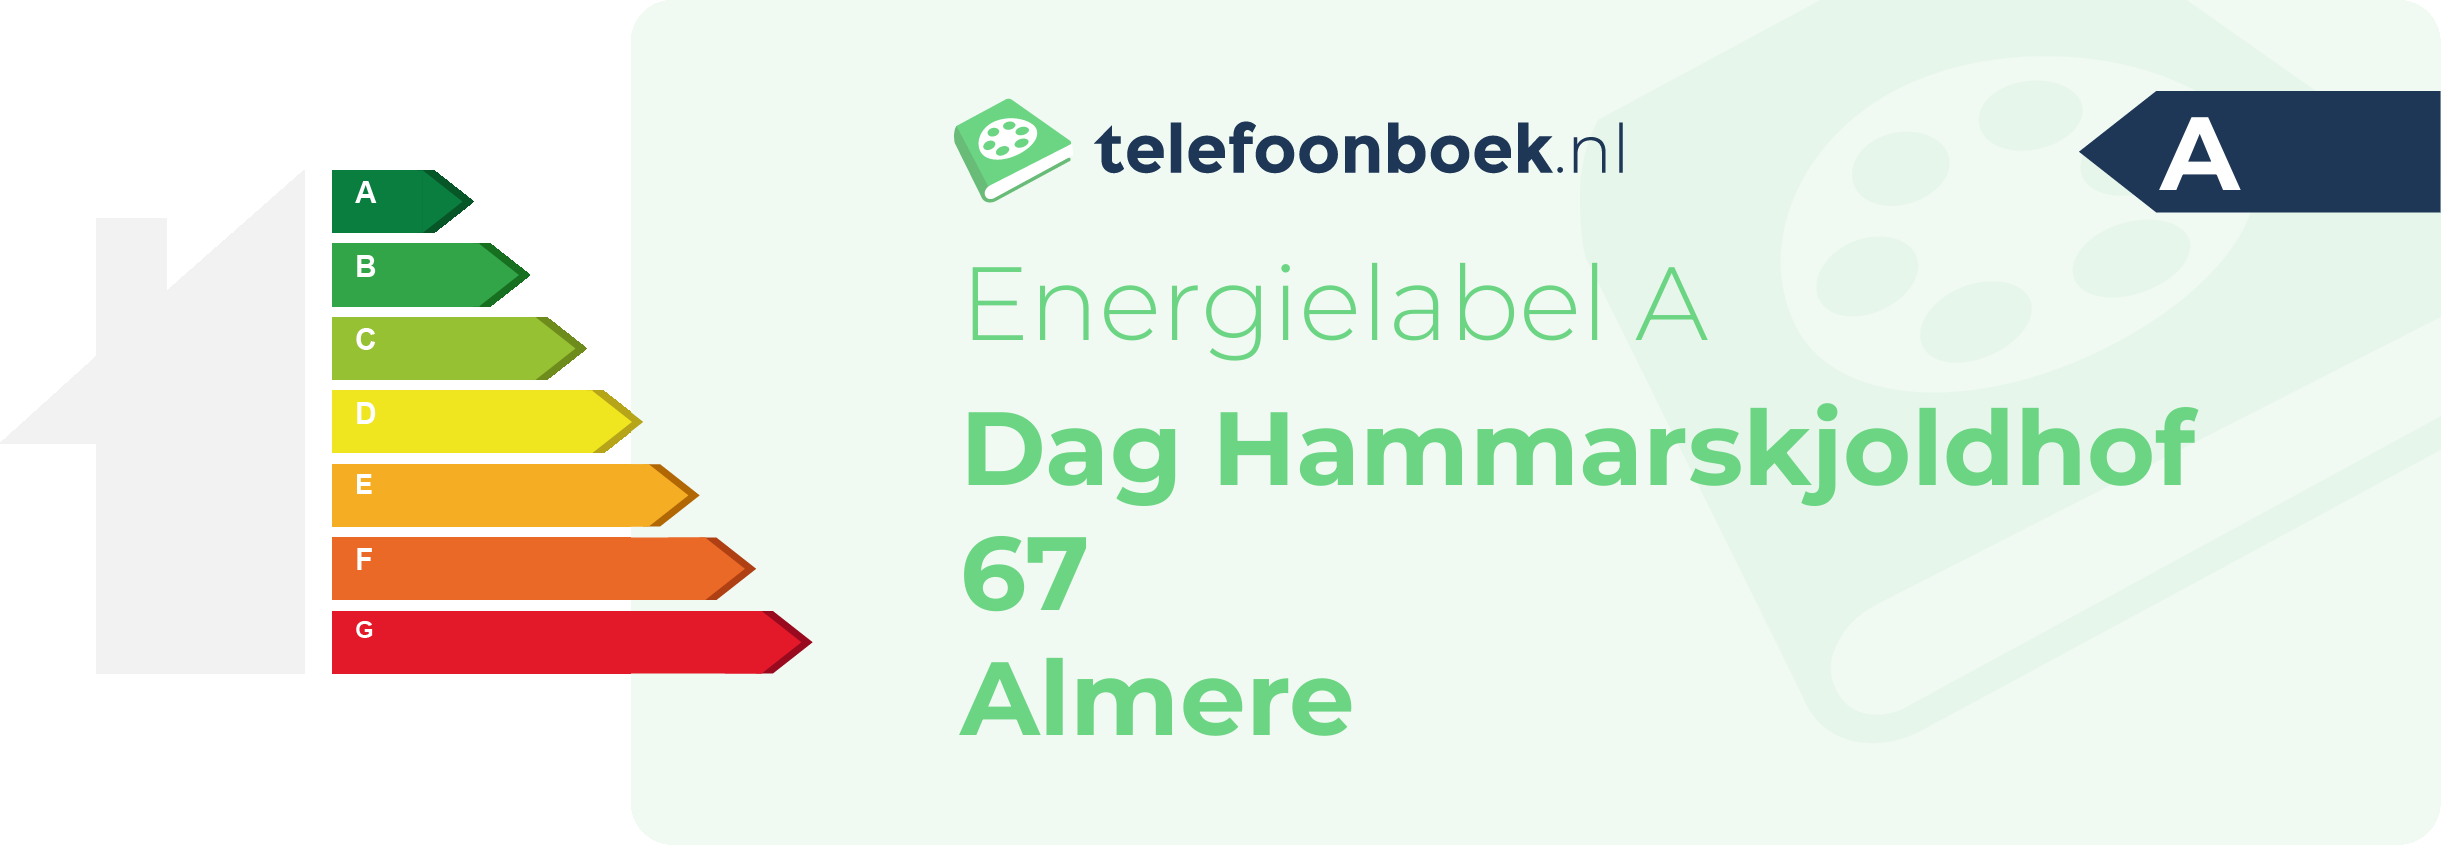 Energielabel Dag Hammarskjoldhof 67 Almere